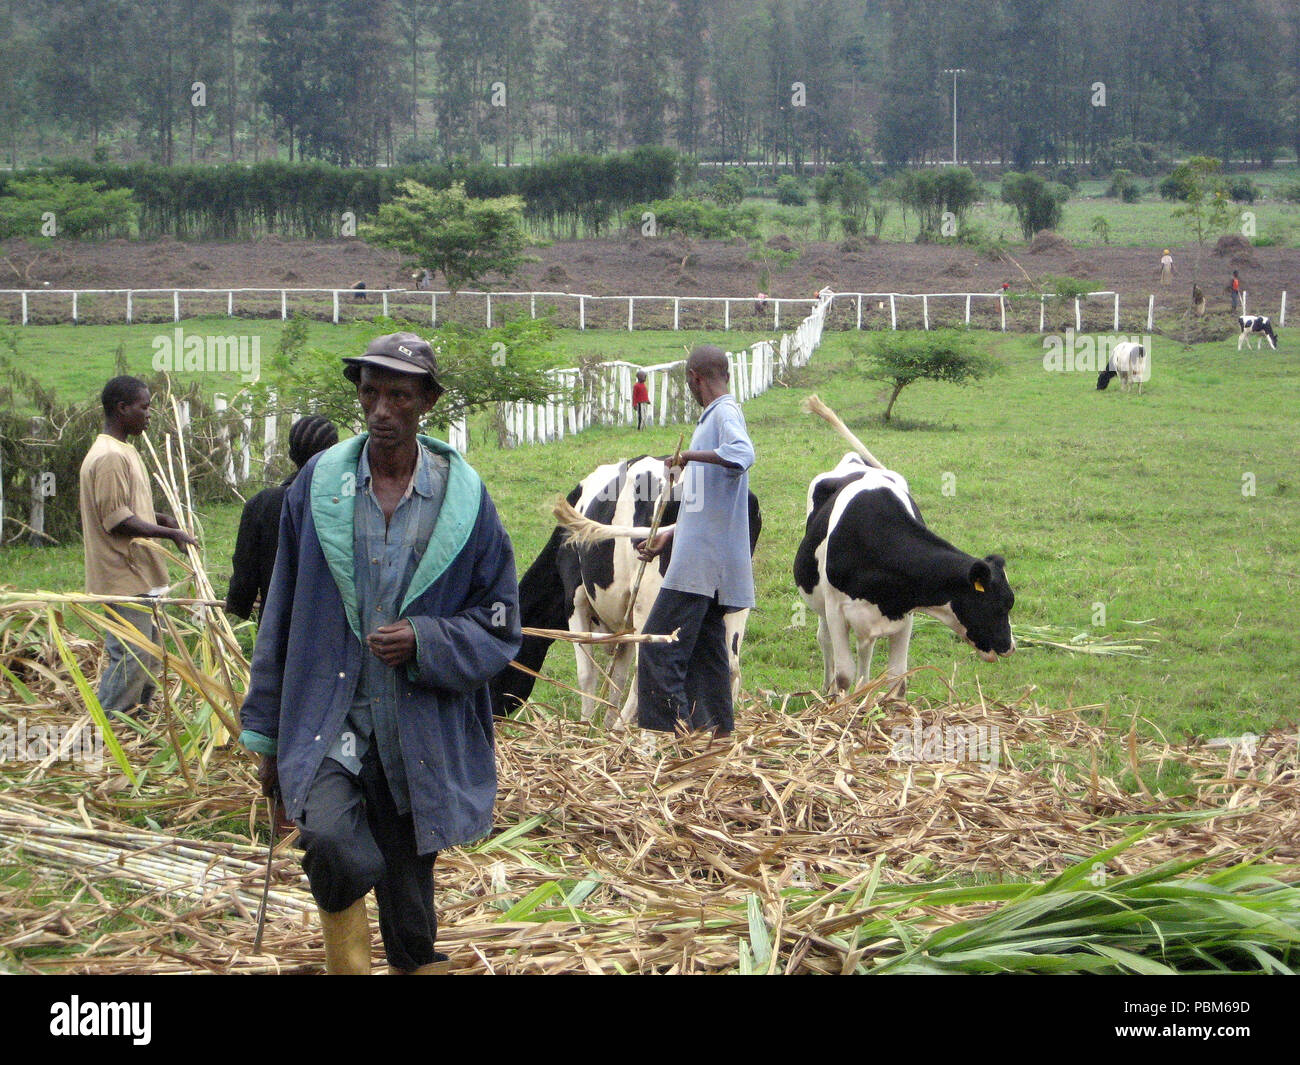 2009 - Rwanda Dairy Farmers and Holstein Cows in a field Stock Photo